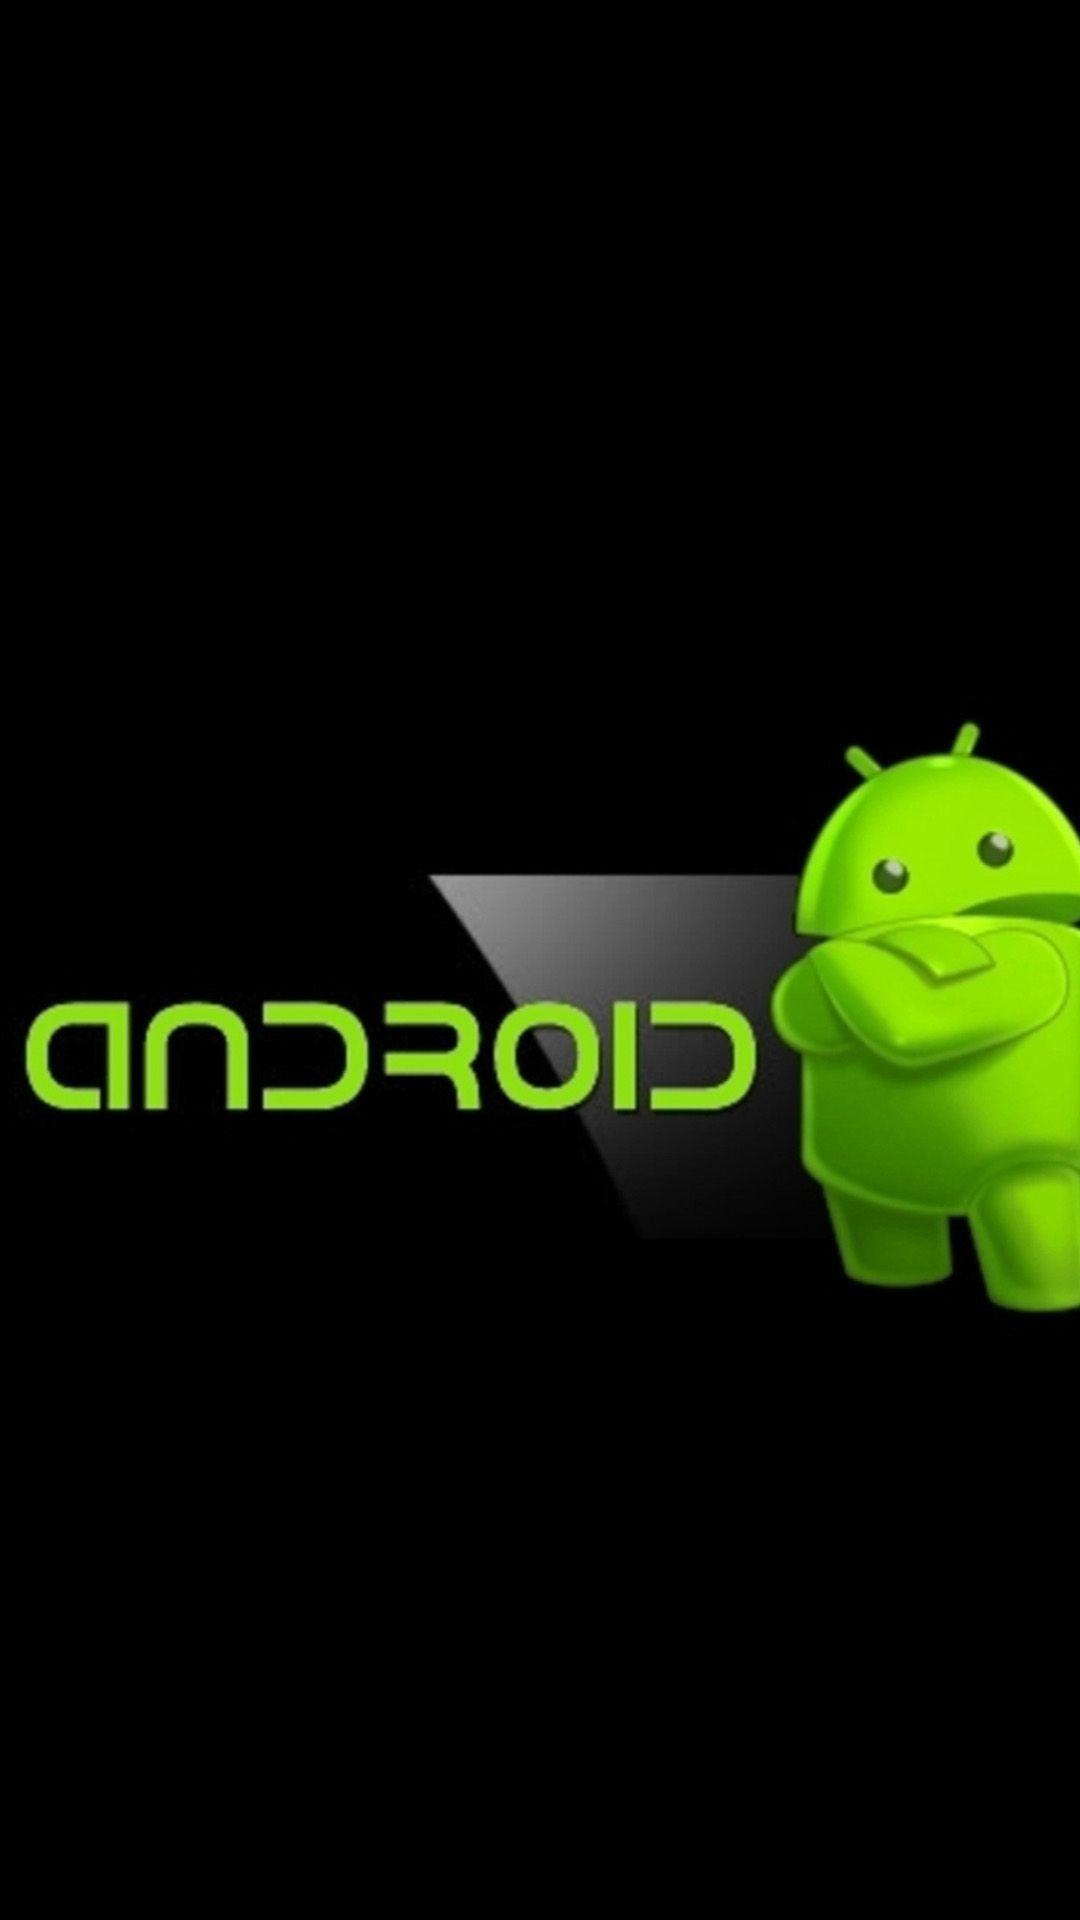 Green Android LOGO 01 Galaxy S5 Wallpaper HD